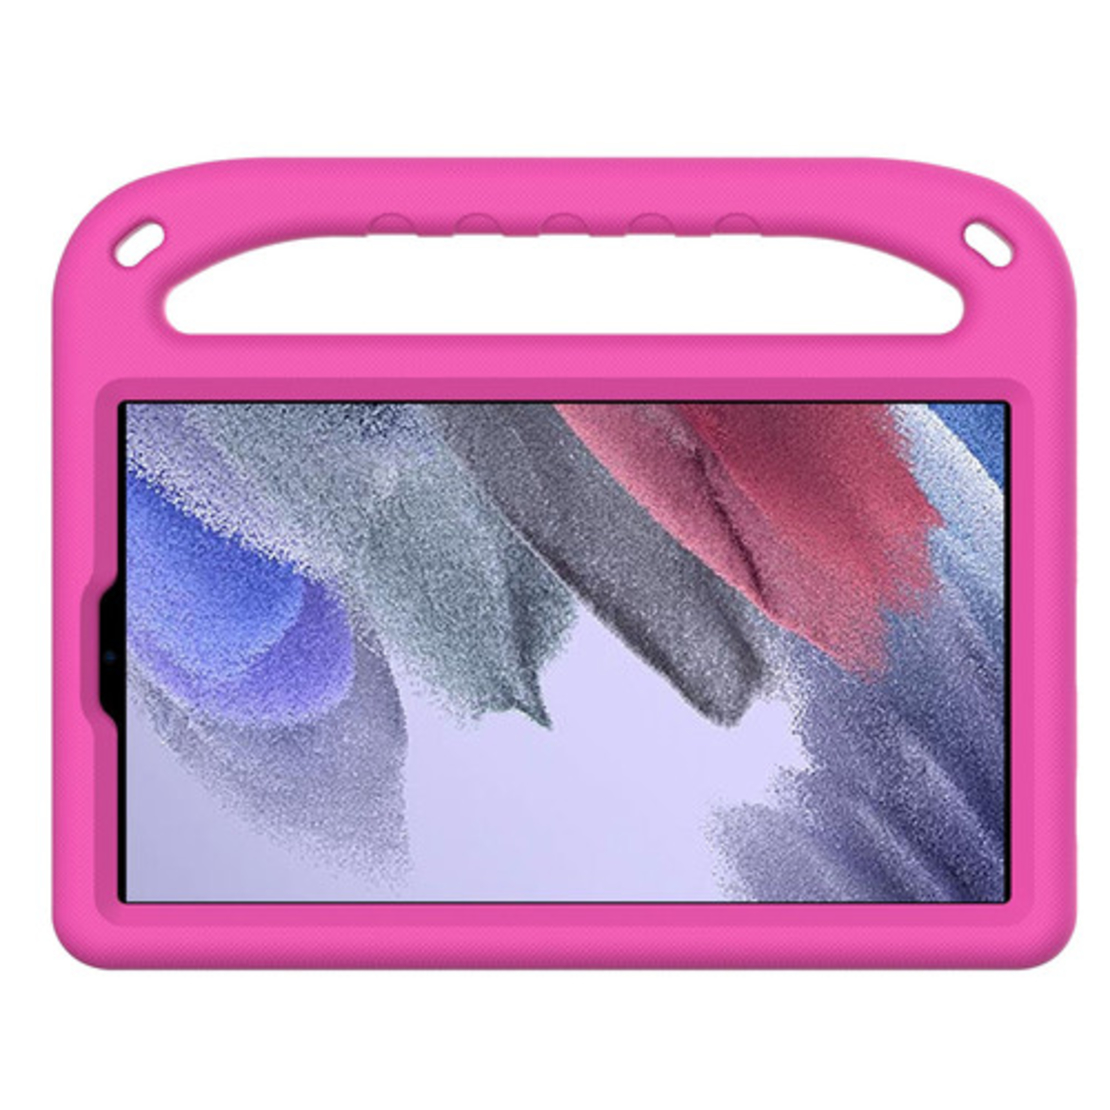 SAMSUNG Galaxy TAB For Kids A7 Lite SM-T220 32GB WIFI Pink Case- E000000207